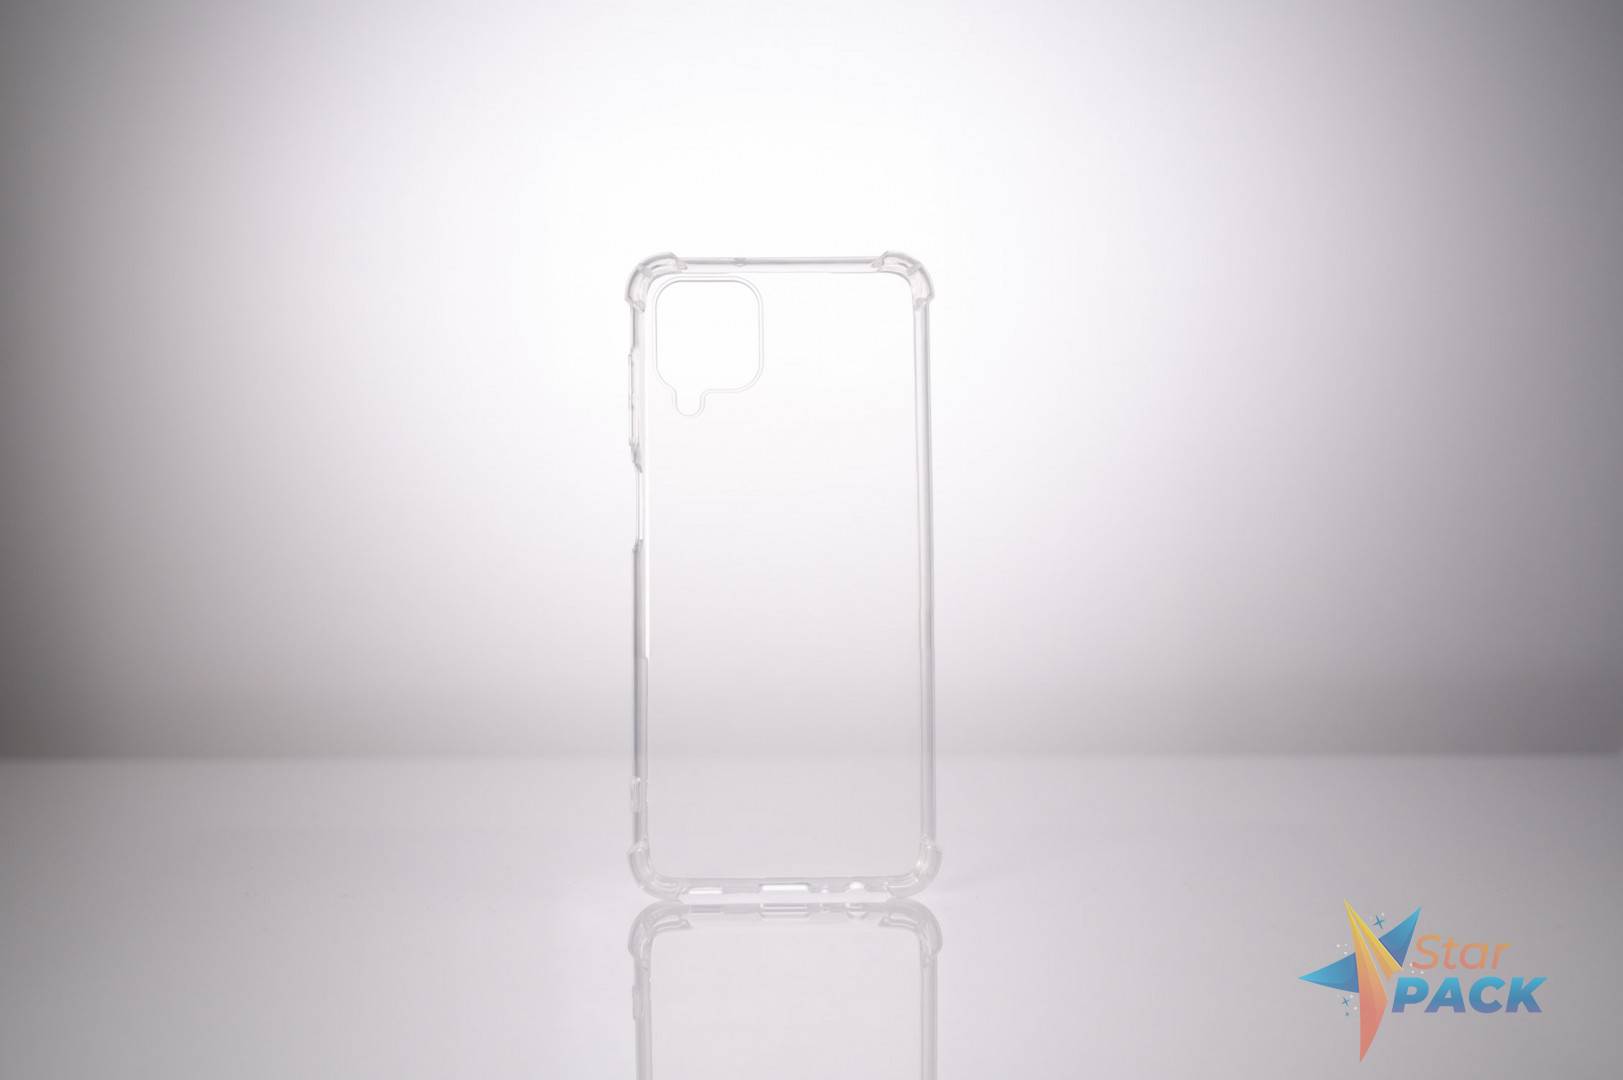 Husa Samsung Galaxy A12 Spacer, transparenta, grosime 1.5mm, protectie suplimentara antisoc la colturi, material flexibil TPU